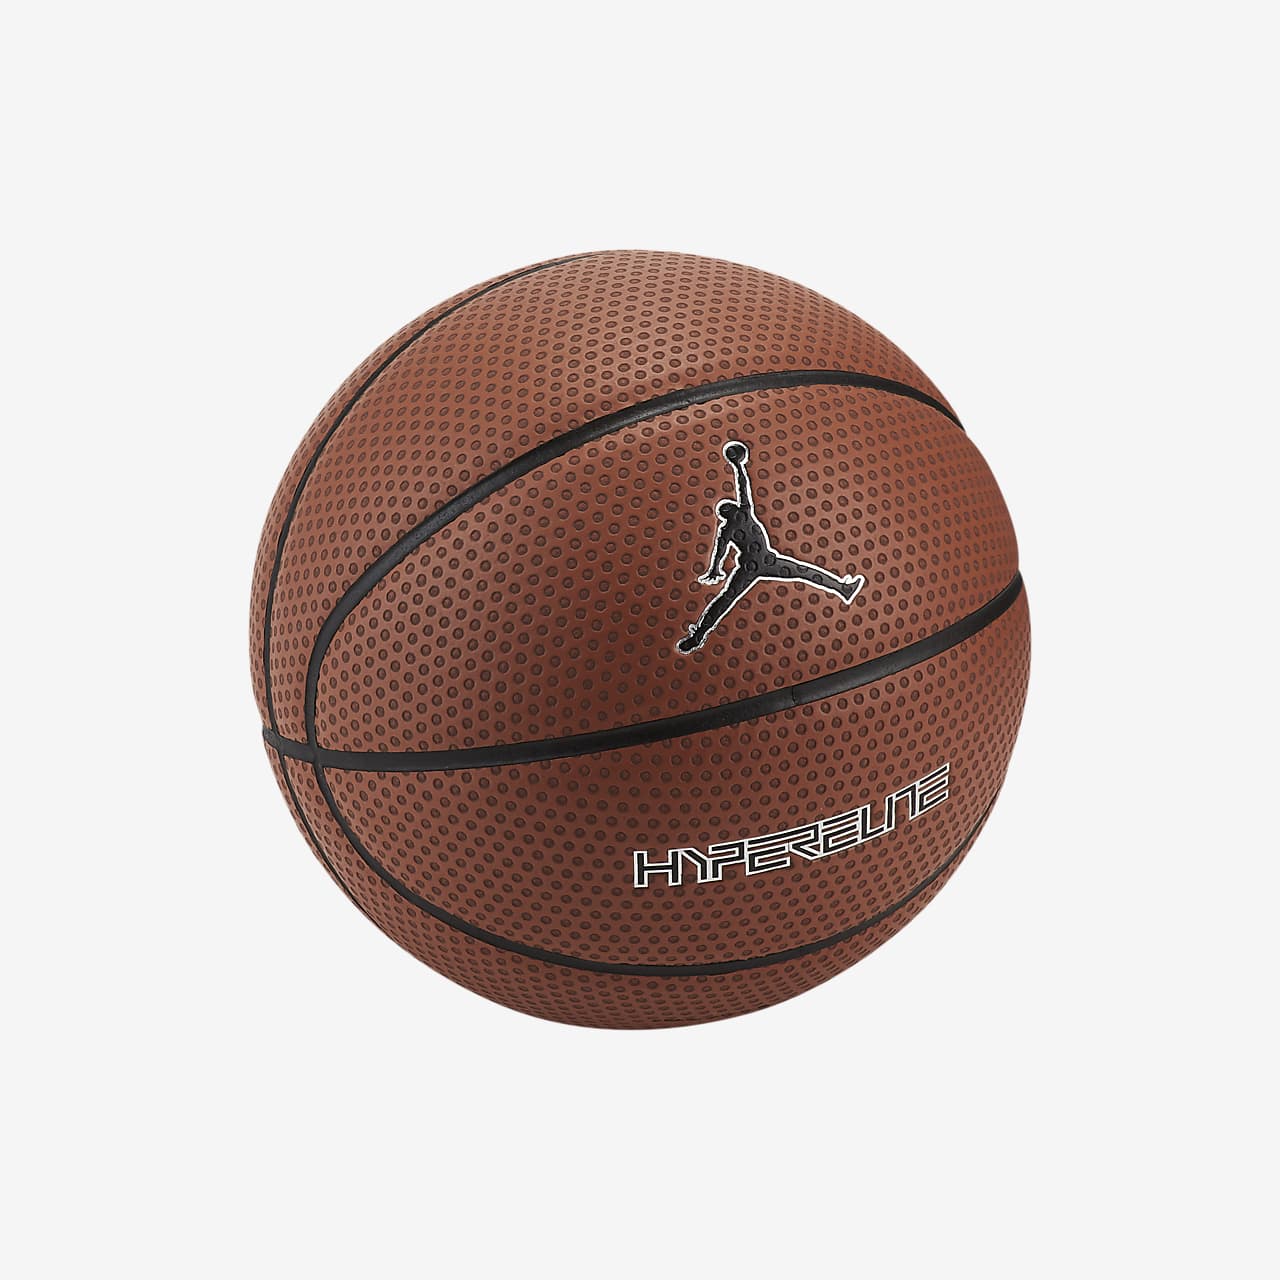 Jordan Hyper Elite 8P Basketball (Size 7)